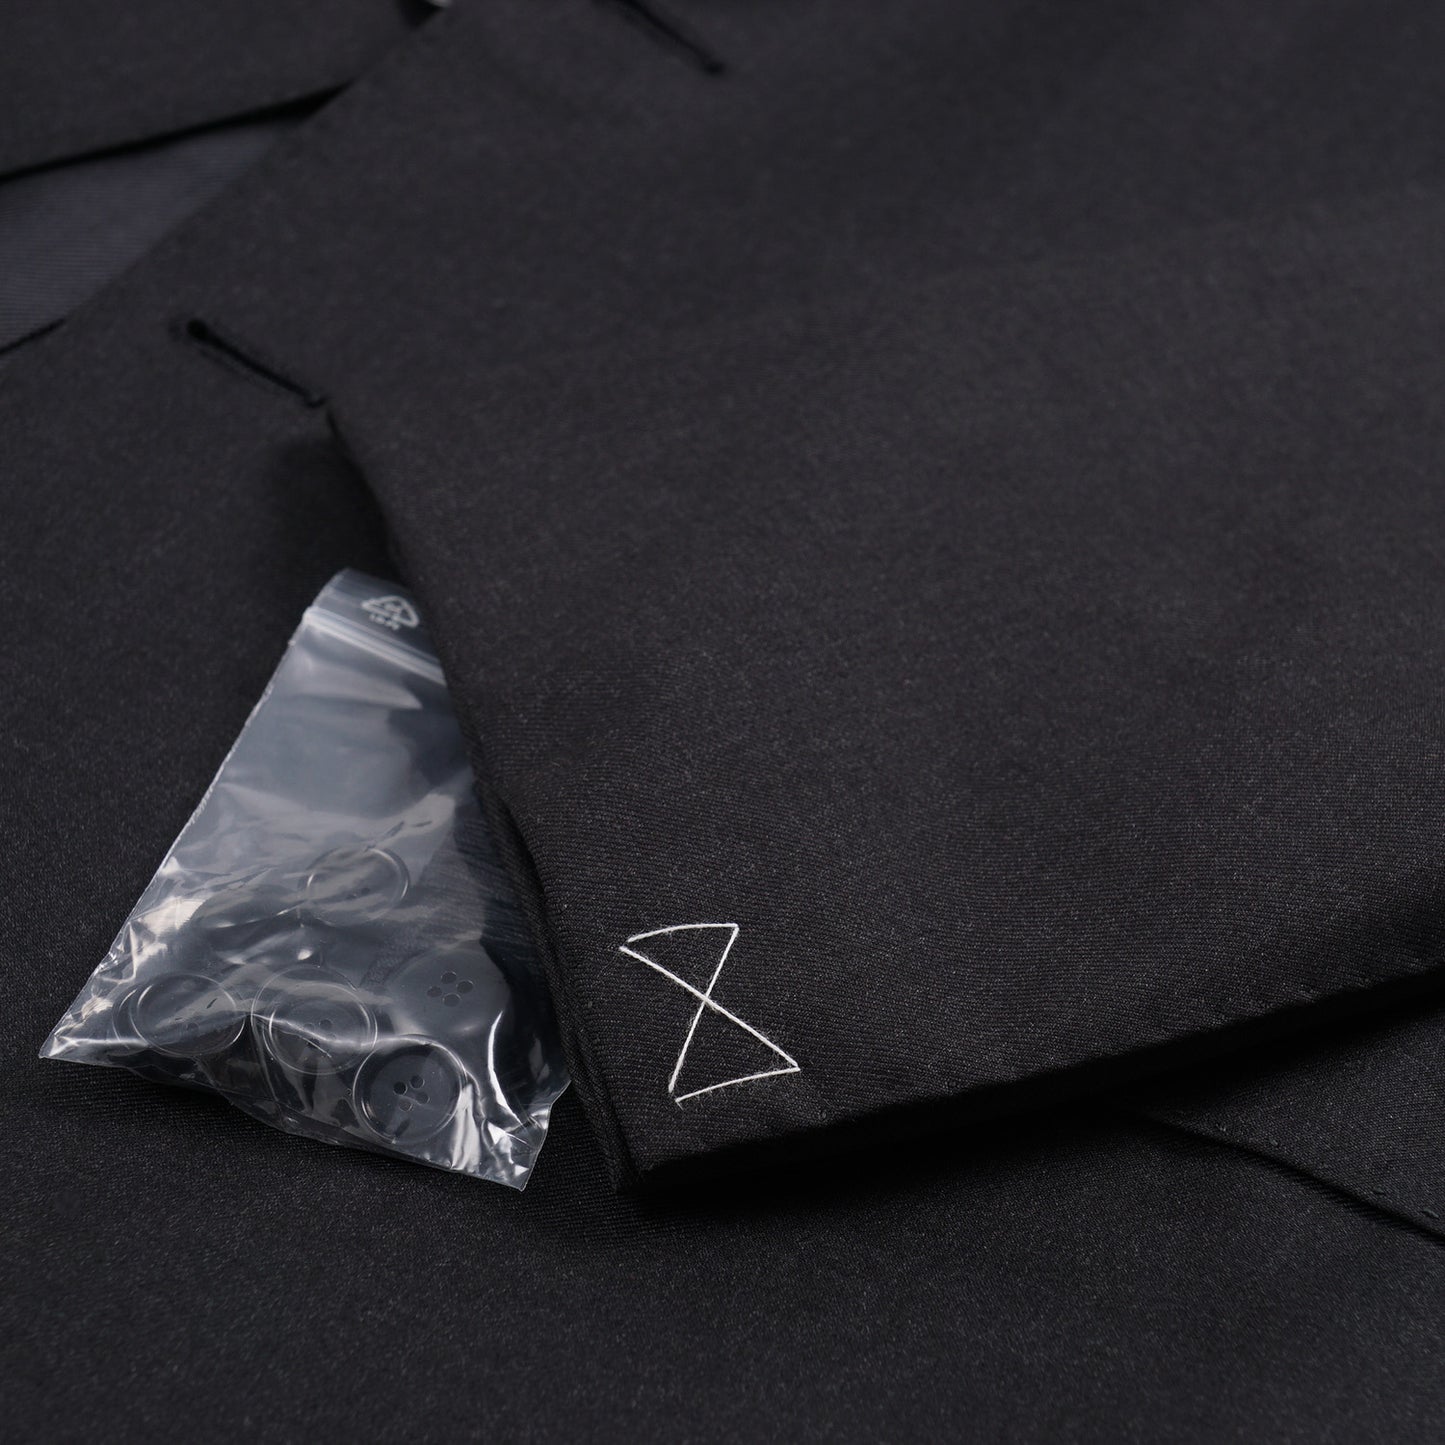 Cesare Attolini Slim-Fit Solid Charcoal Wool Suit - Top Shelf Apparel